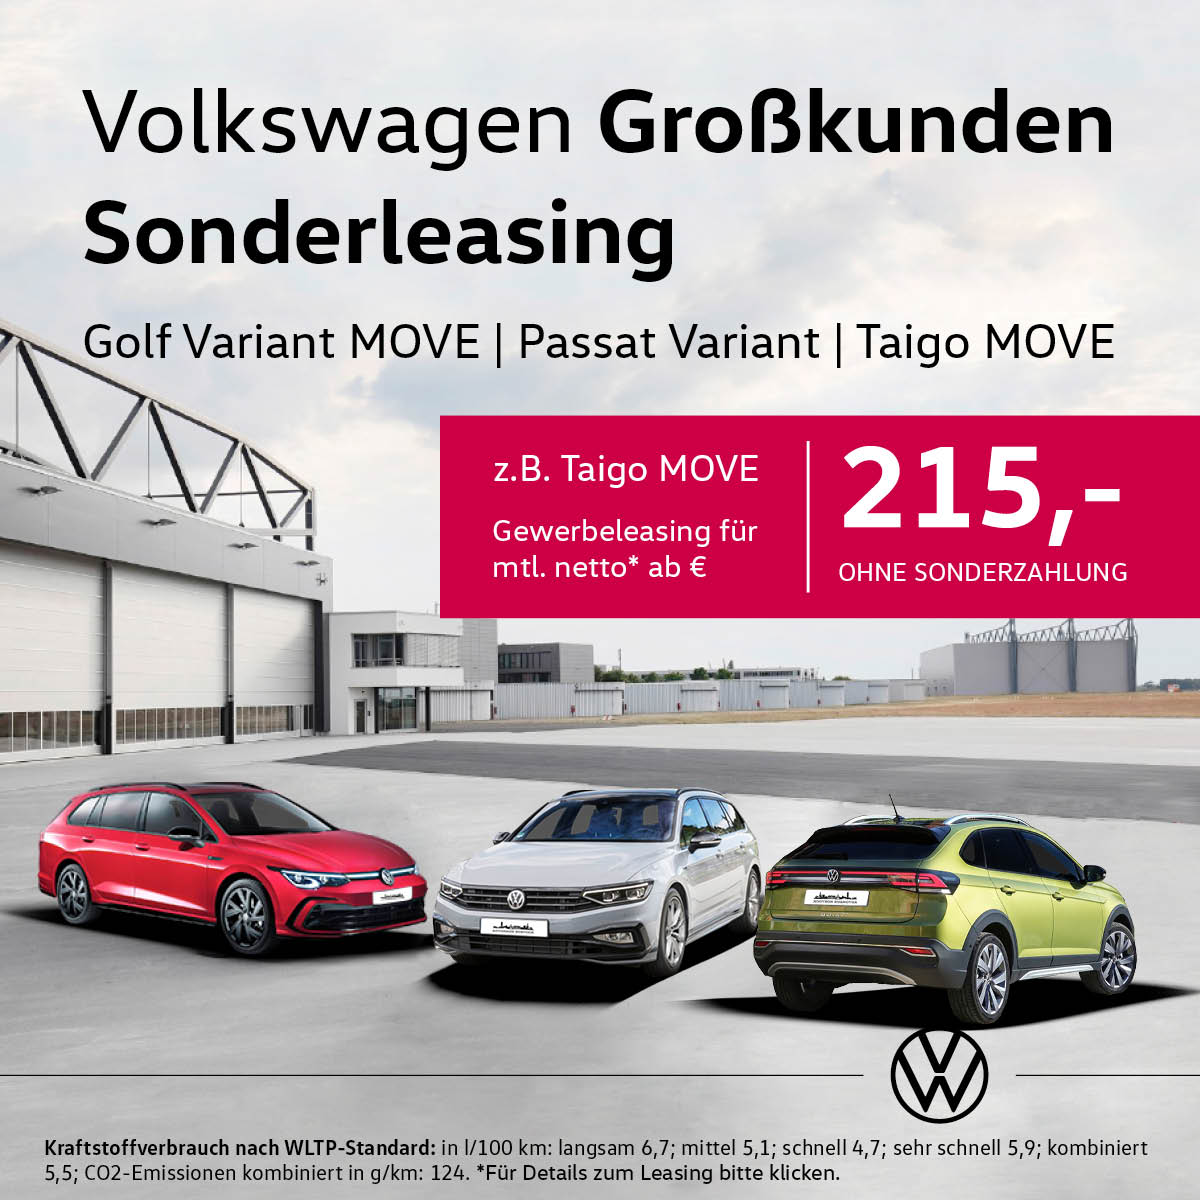 Autohaus Rostock Rövershäger Chaussee 5 - Jetzt Volkswagen Großkunden Sonderleasing - Golf Variant MOVE, Passat Variant, Taigo MOVE Beitragsbild